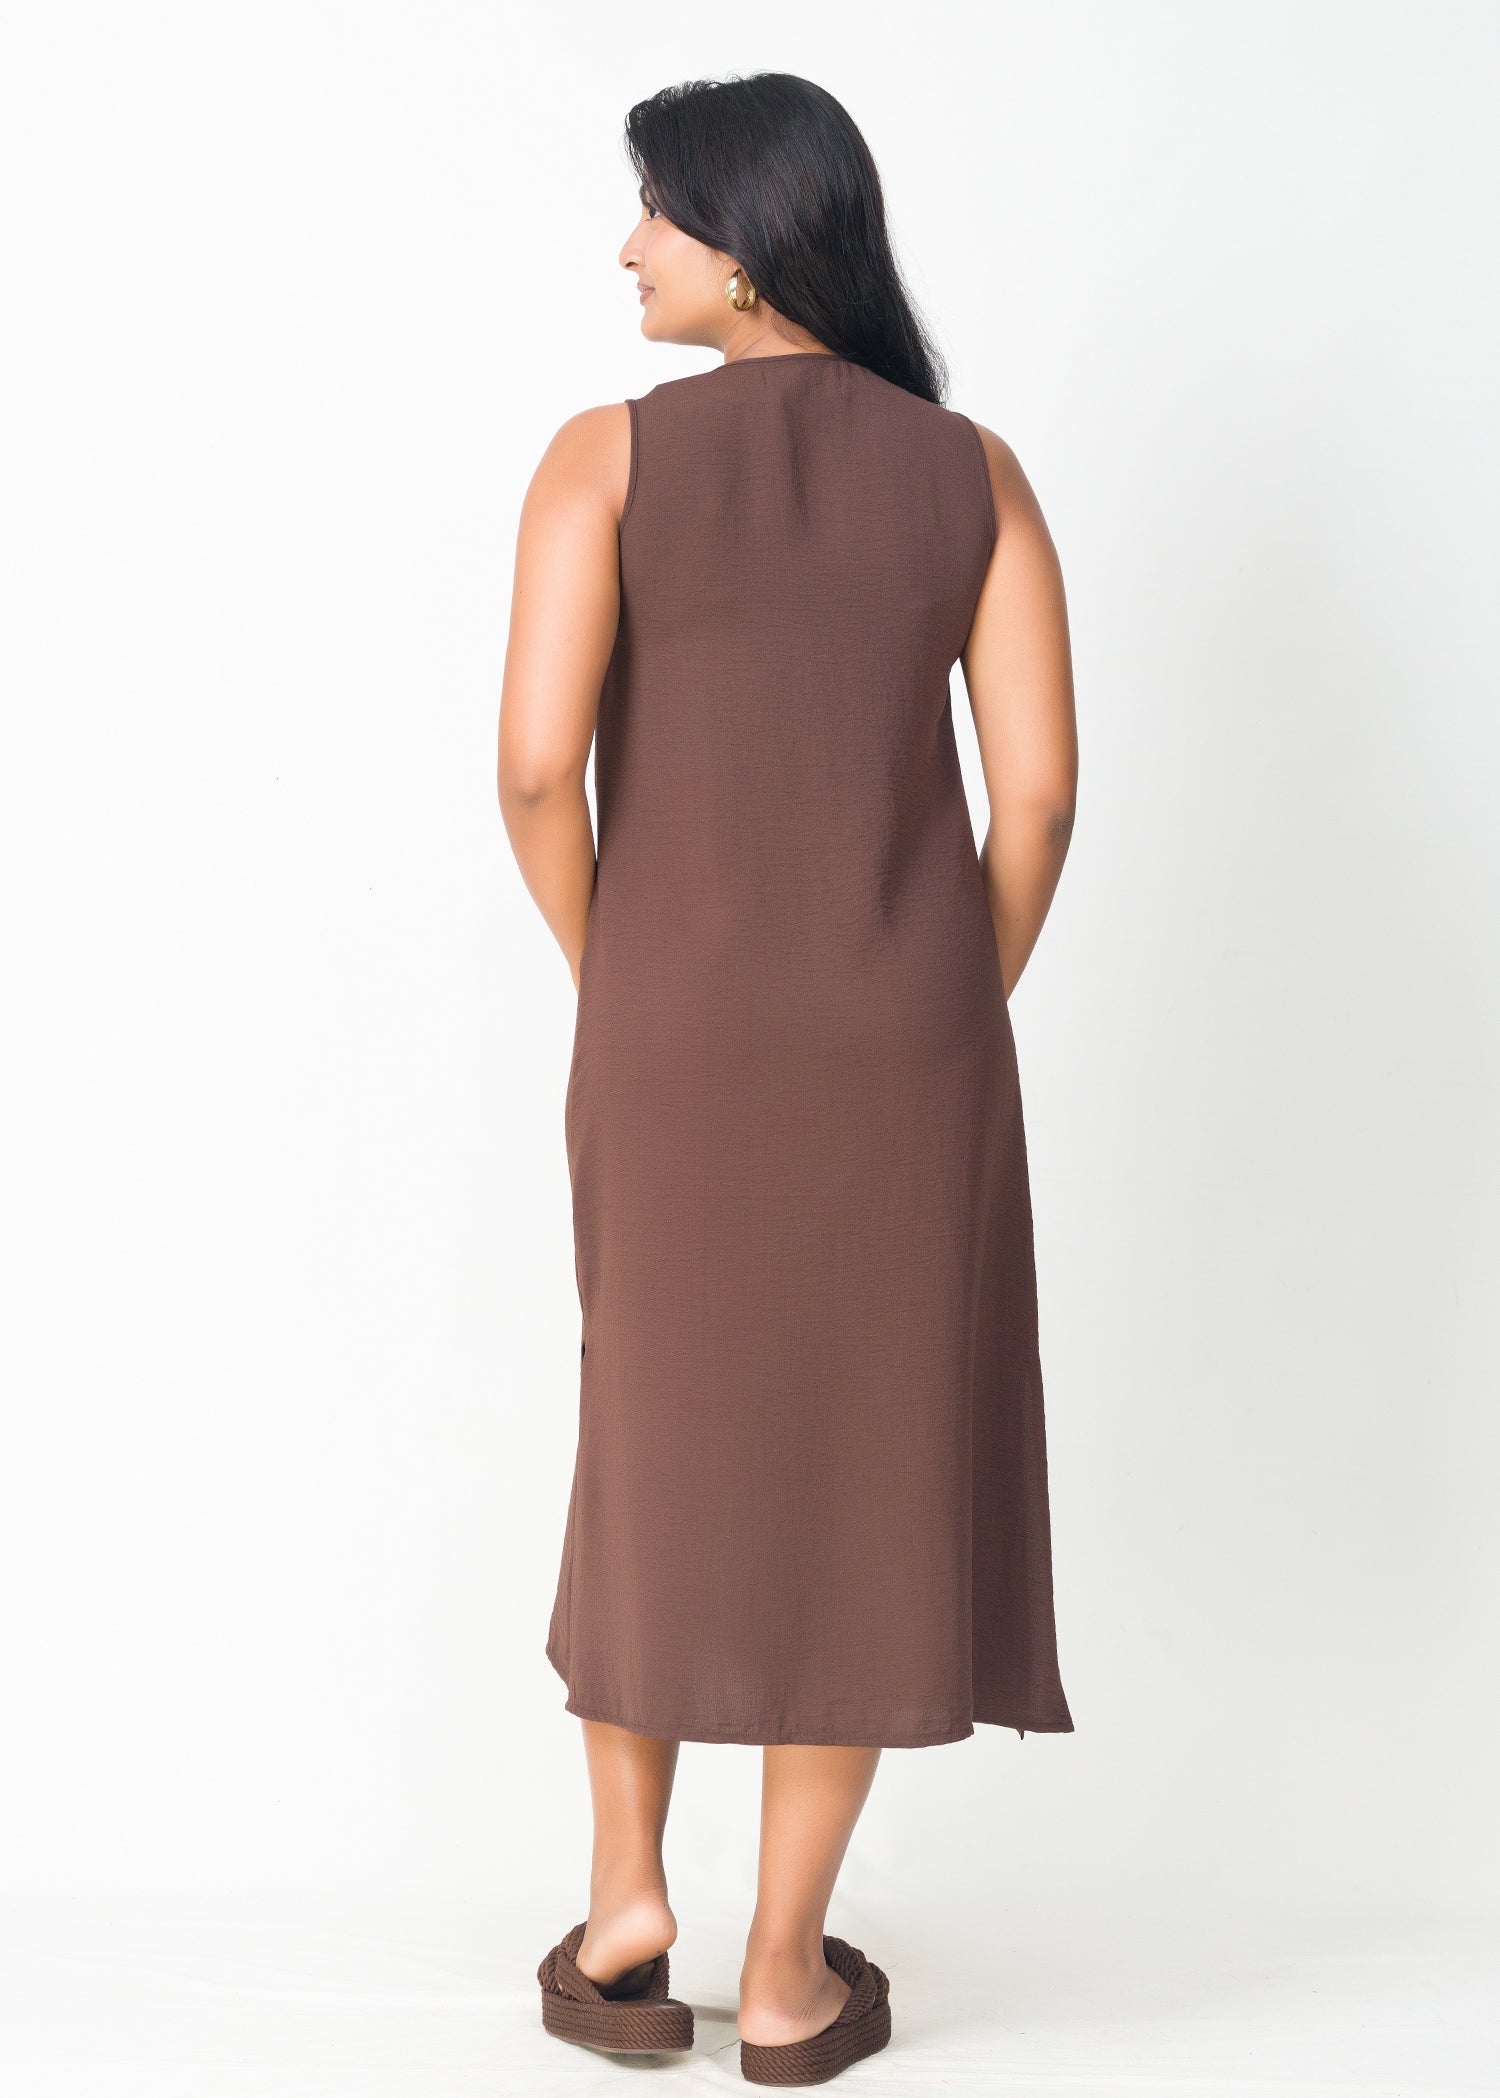 Sleeveless V-Neck solid dress